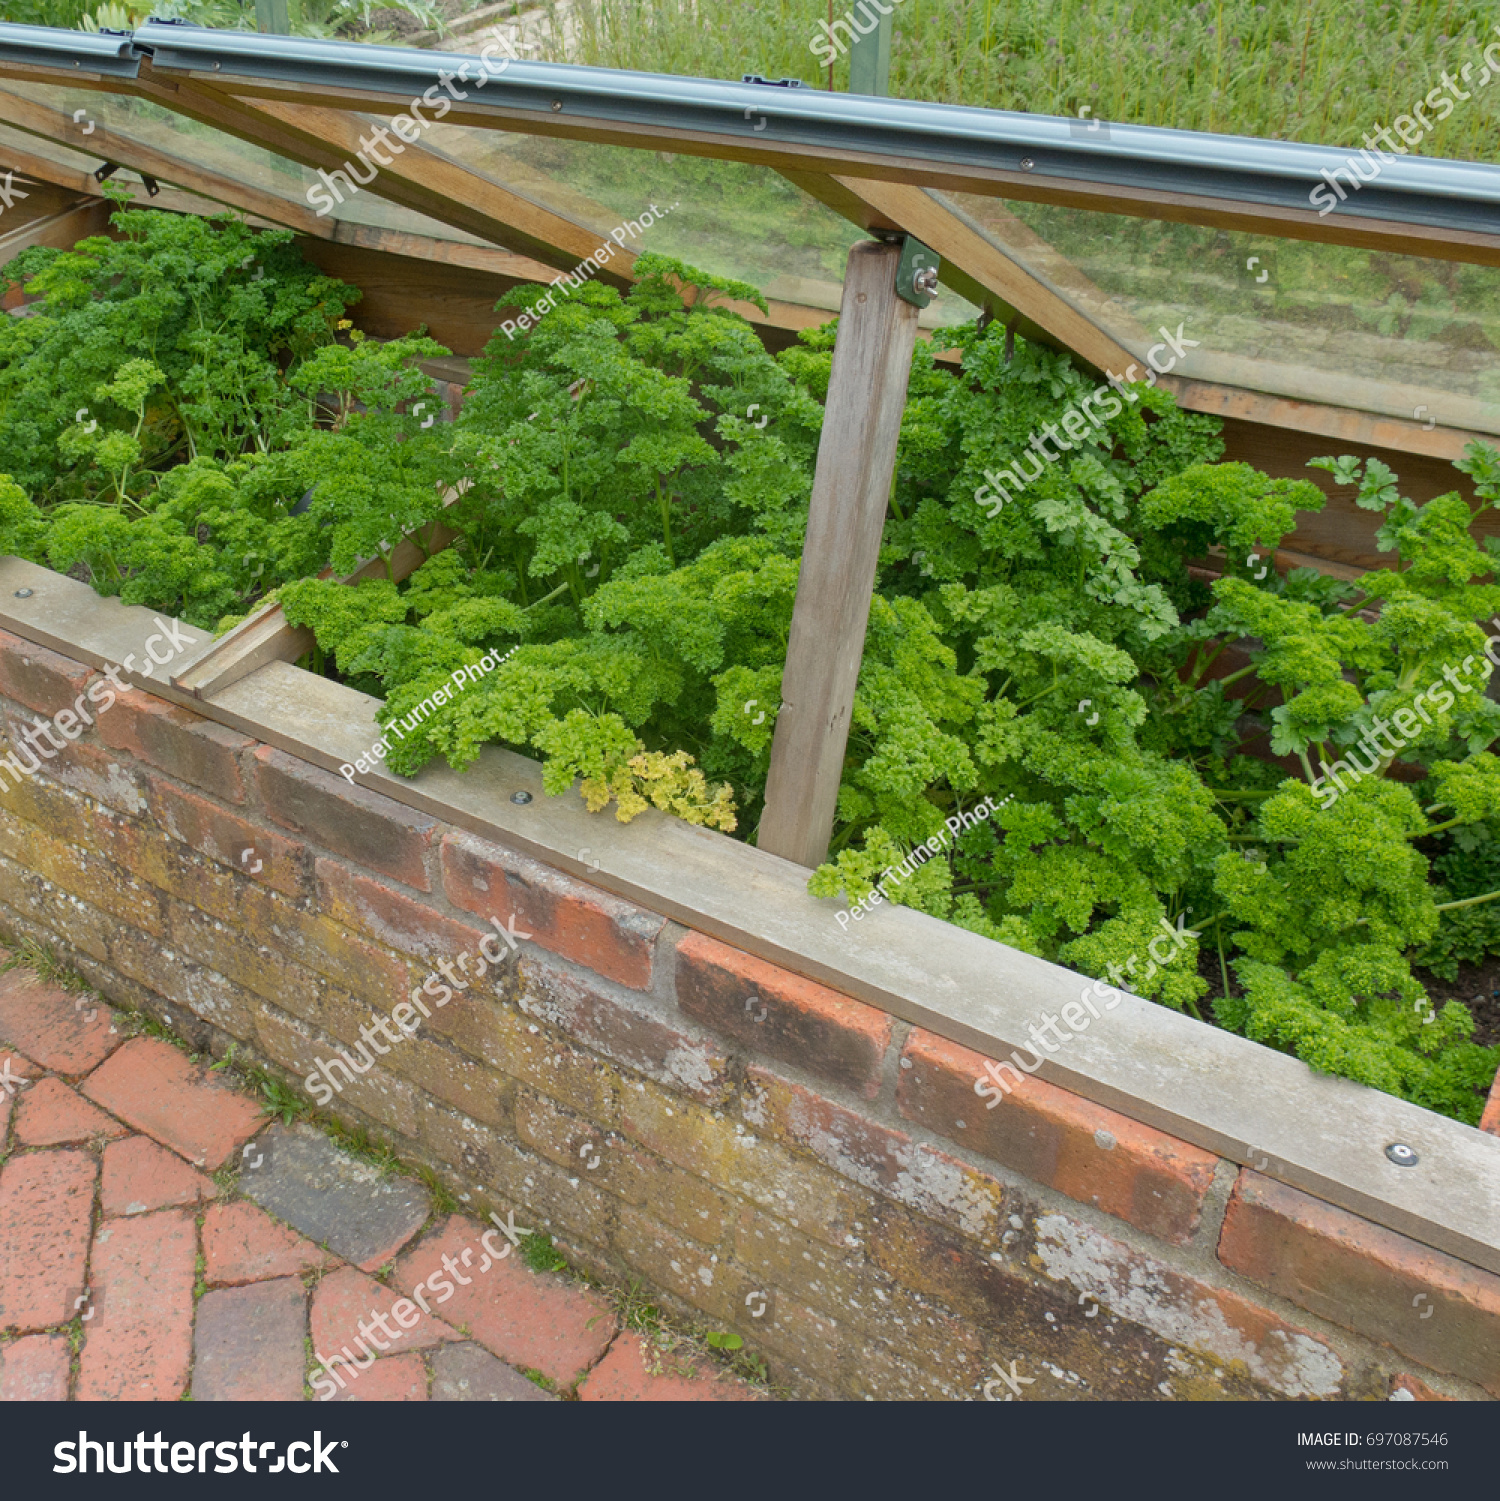 Parsley 'Envy' (Petroselinum crispum) Growing in an Overlap Cold Frame in a Vegetable Garden in Rural Devon, England, UK #697087546